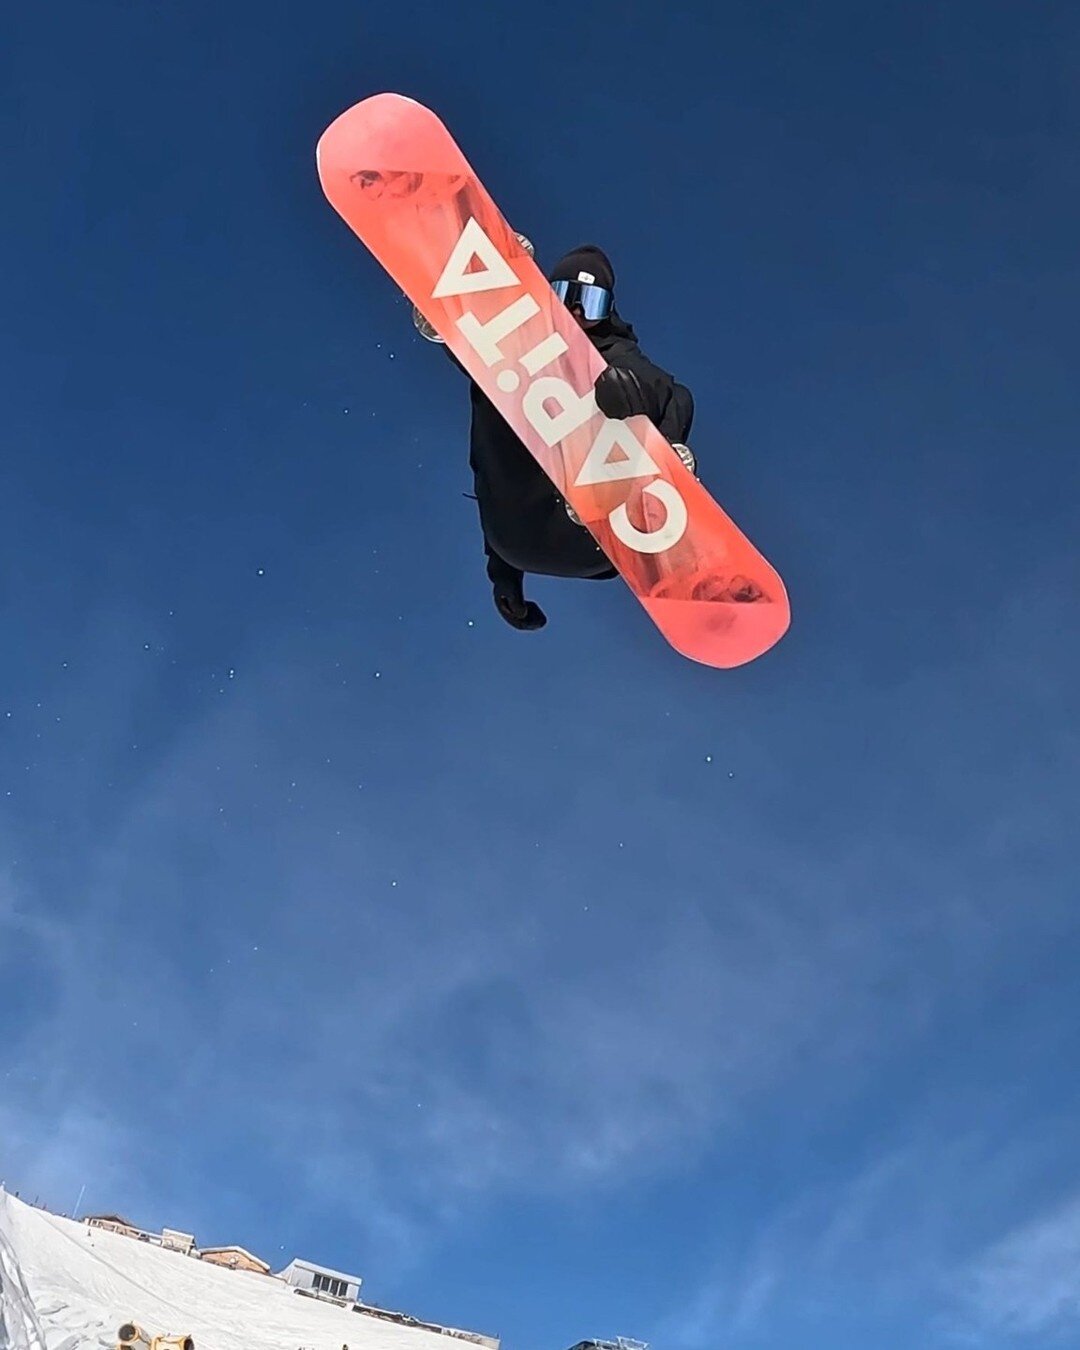 @aleboyens catching the sky 🚀

📷 @franjarillo

#CAPiTA #CAPiTADOA #Snowboard #Unionbindings